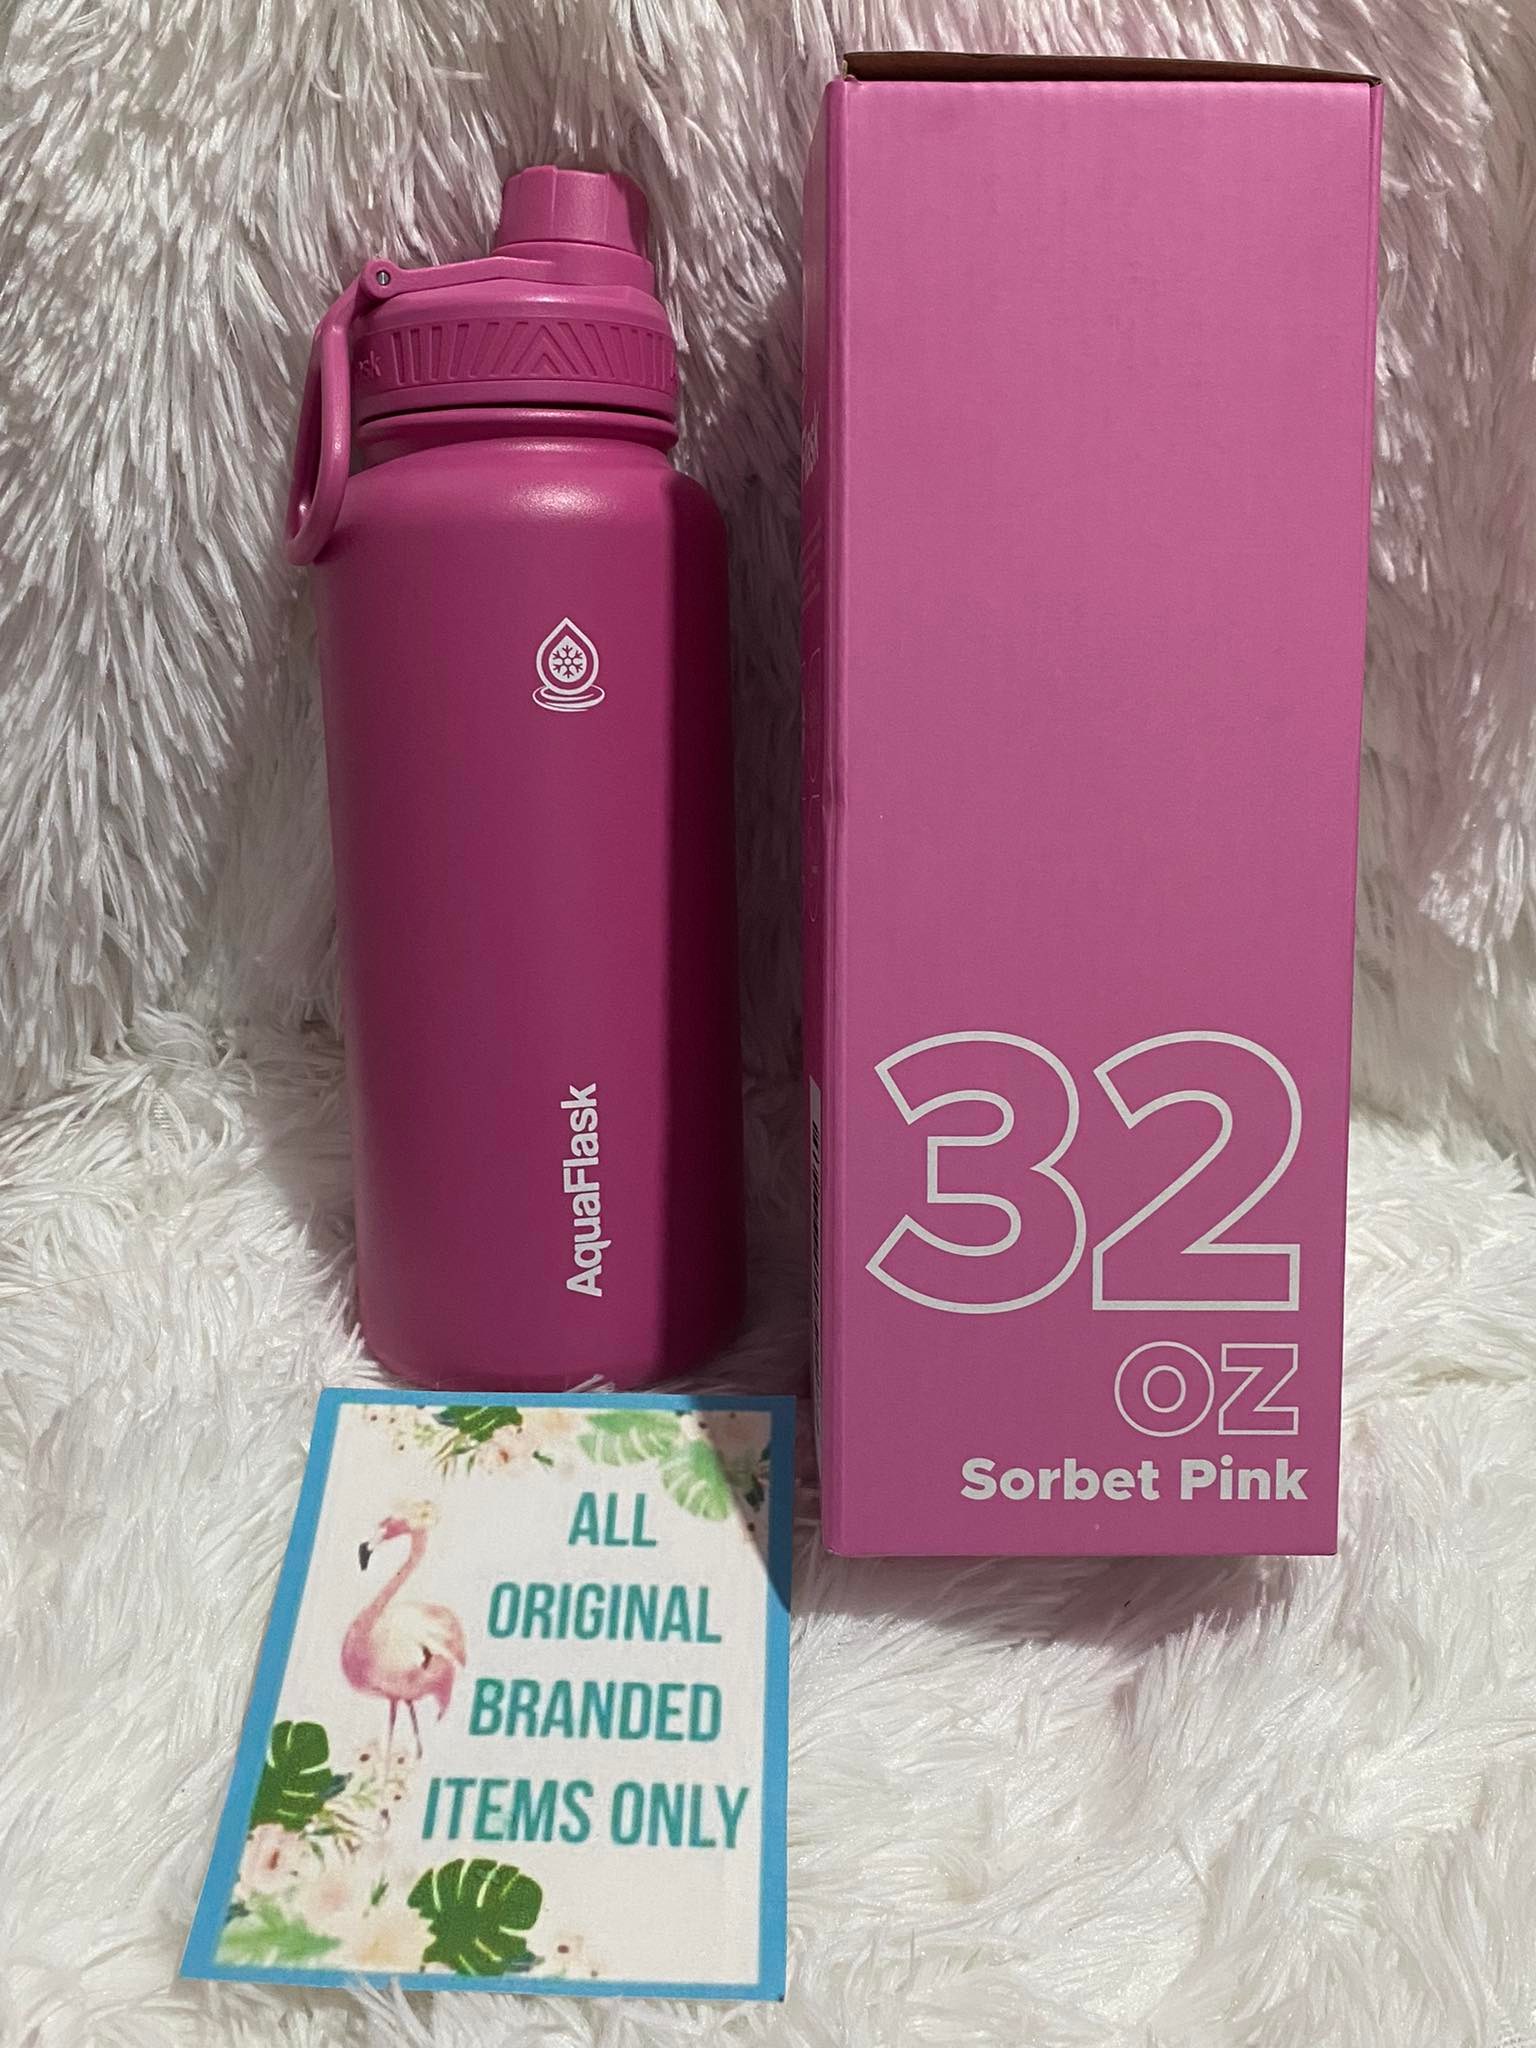 32oz Sorbet Pink - Aquaflask